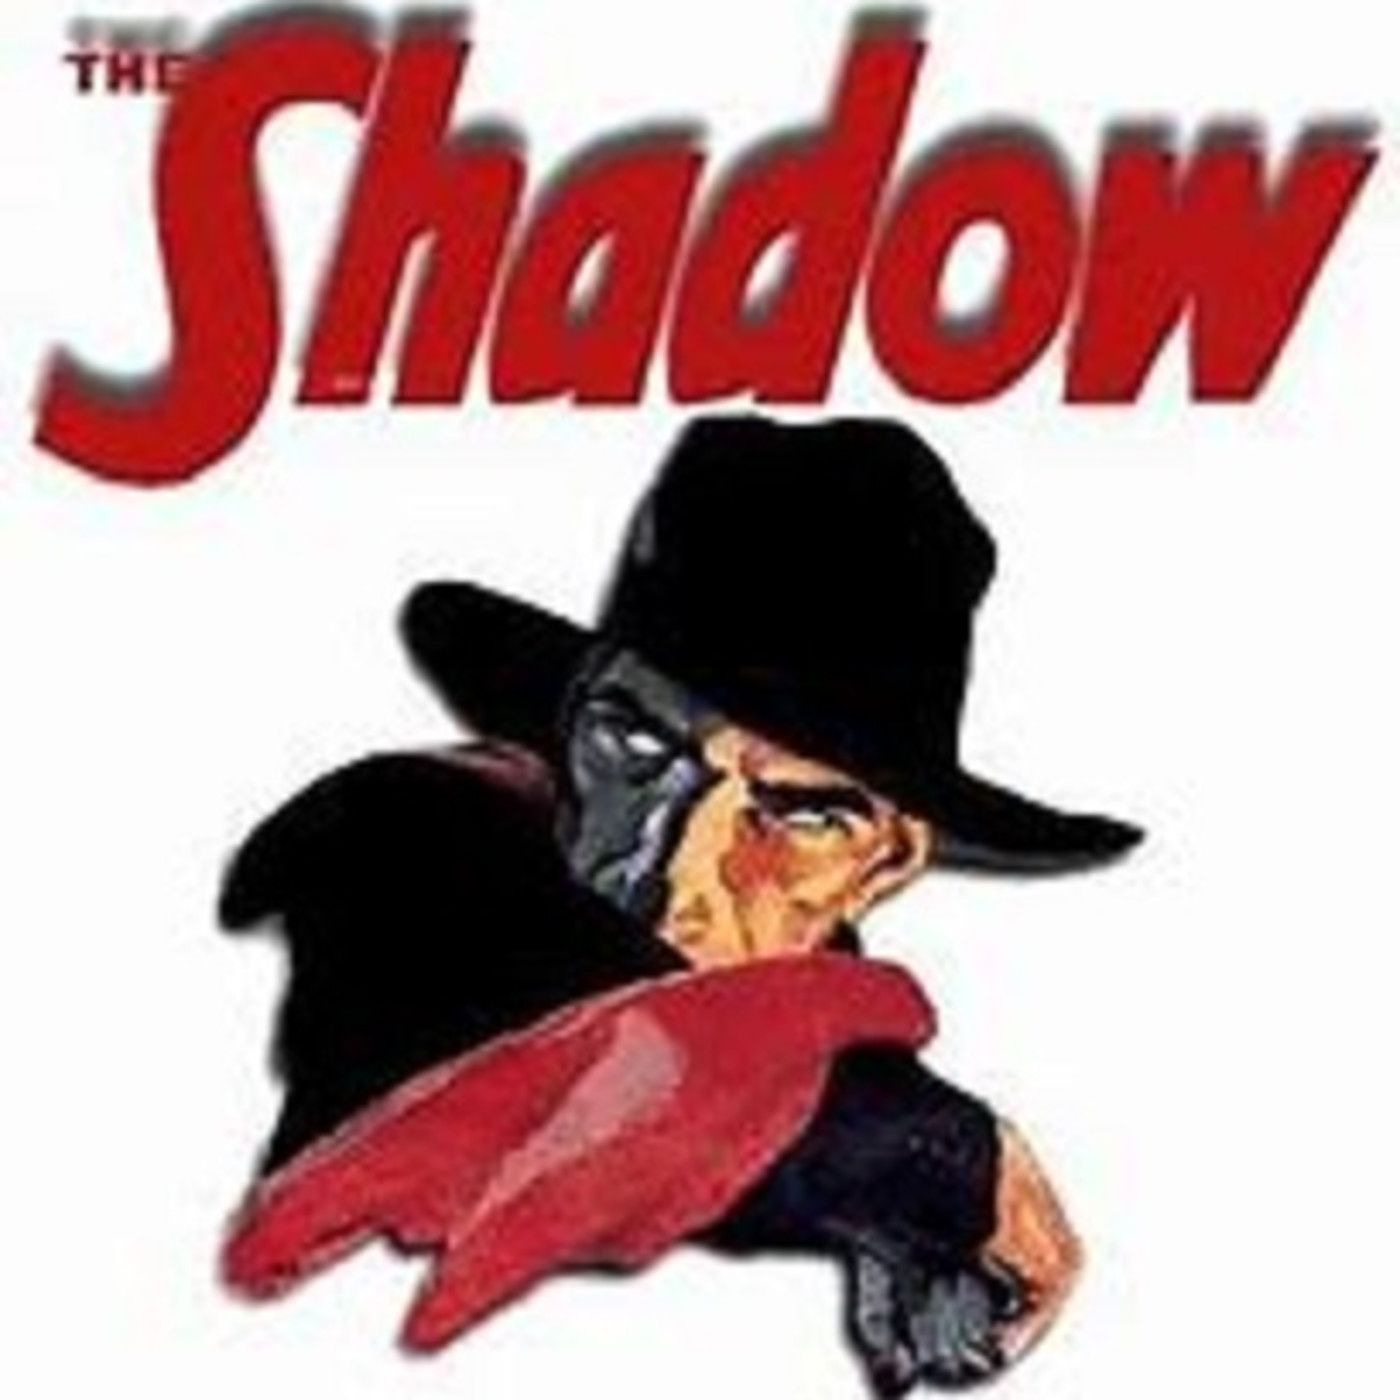 1947-1123 - The Comic Strip Killer - 00 - The Shadow